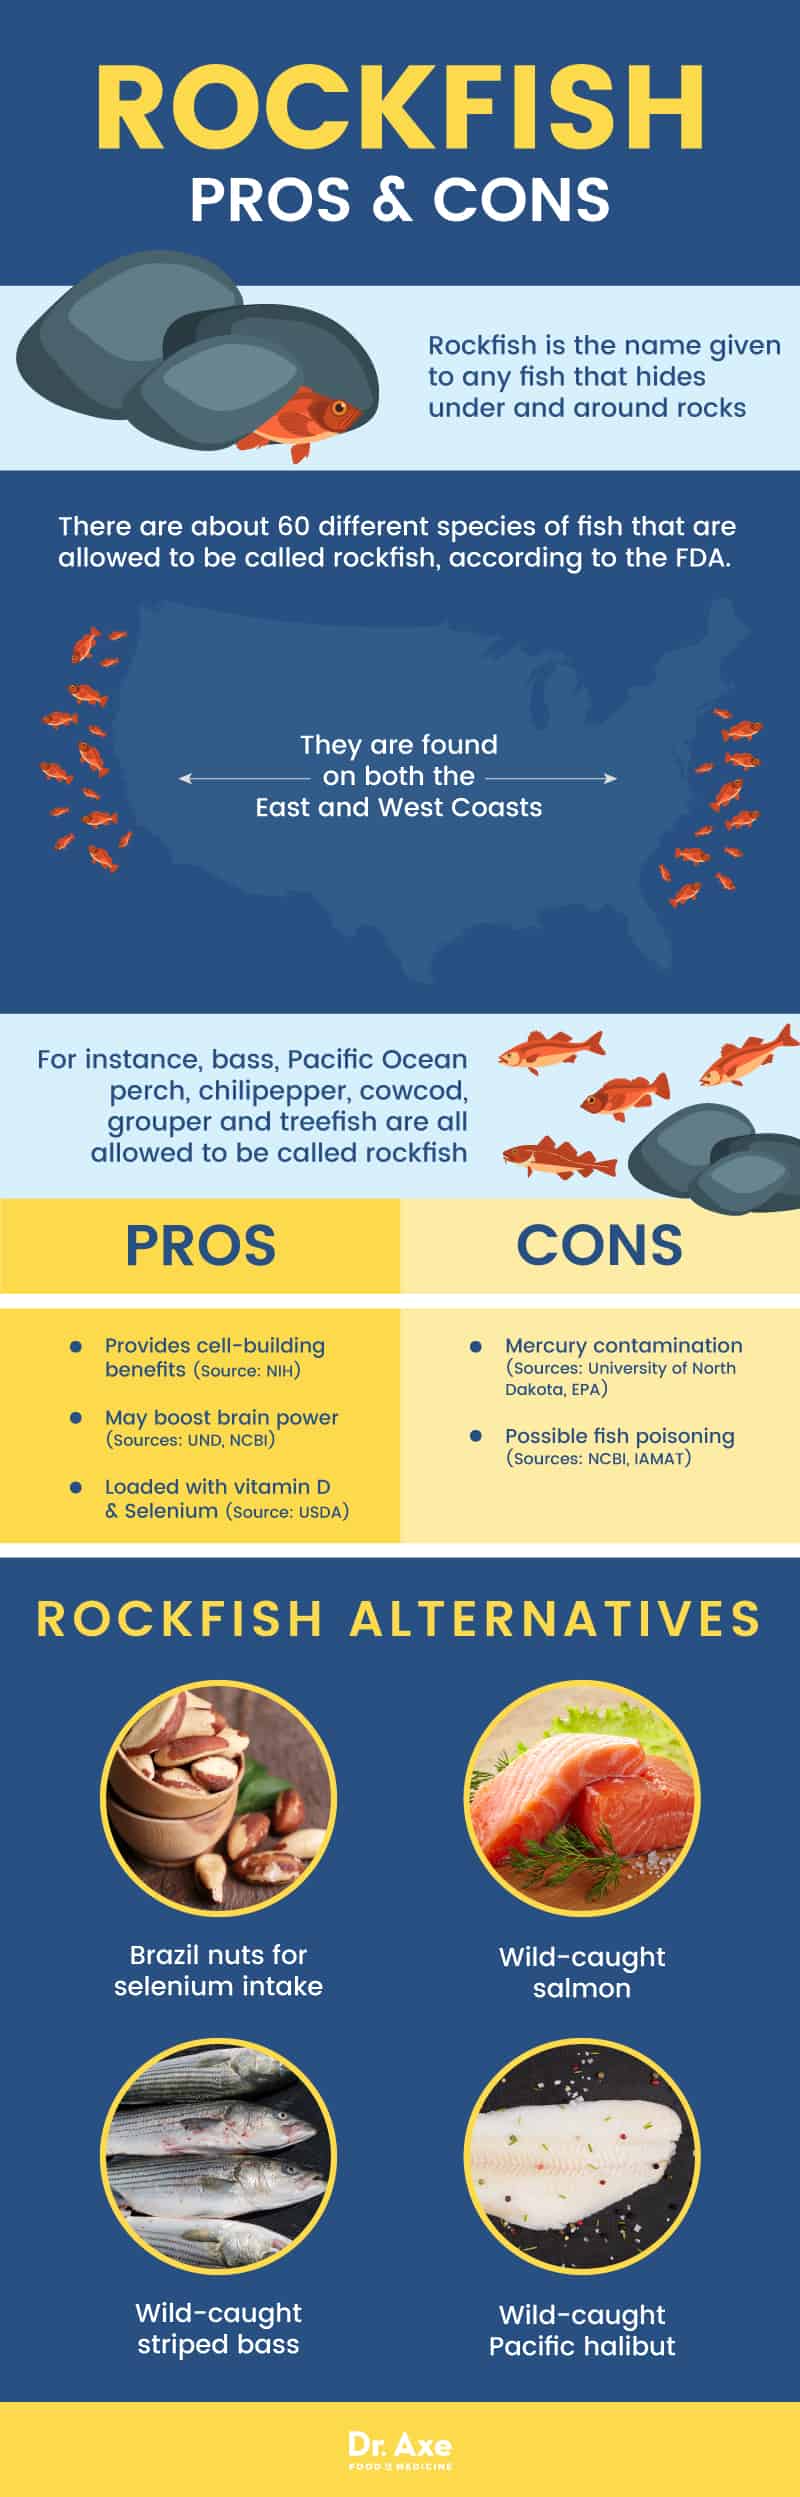 Rockfish pros and cons - Dr. Axe